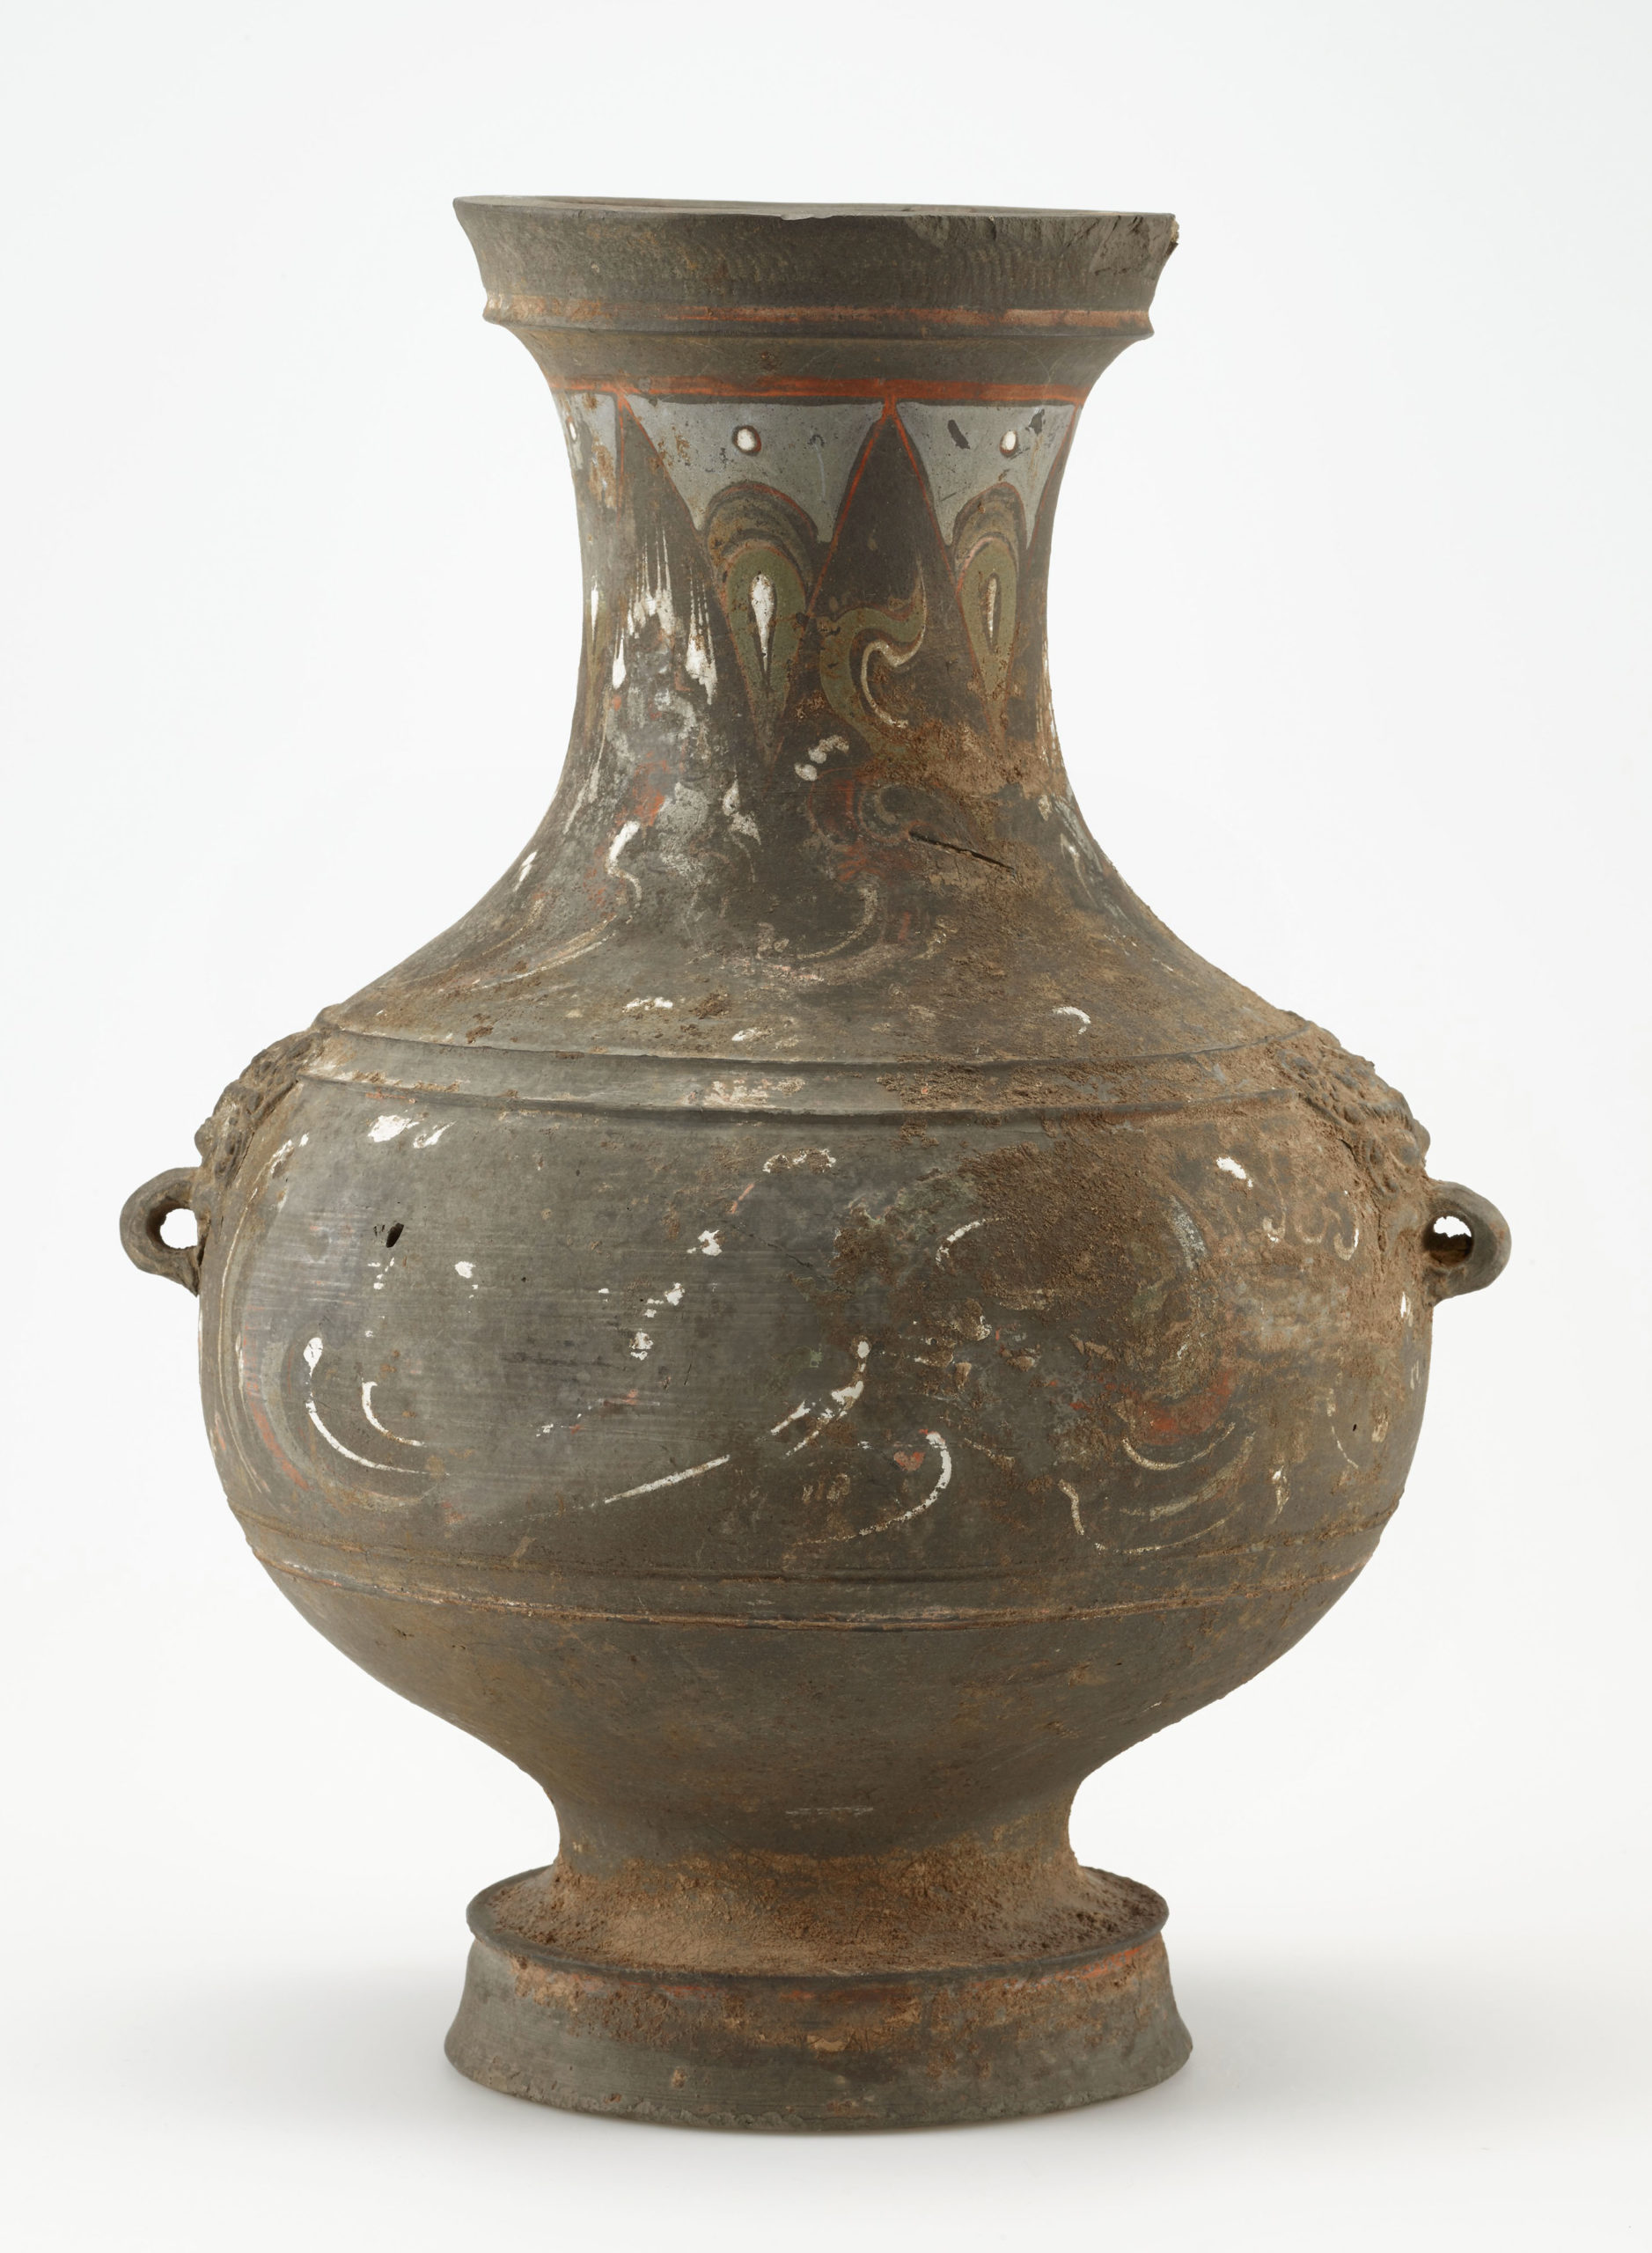 Jar (hu), Qin dynasty, 221 B.C.-206, ceramic, China, 34.3 high x 25.6 x 22.6 cm (Long-term loan from the Smithsonian American Art Museum; gift of John Gellatly, 1929.8.328, LTS1985.1.328.1)